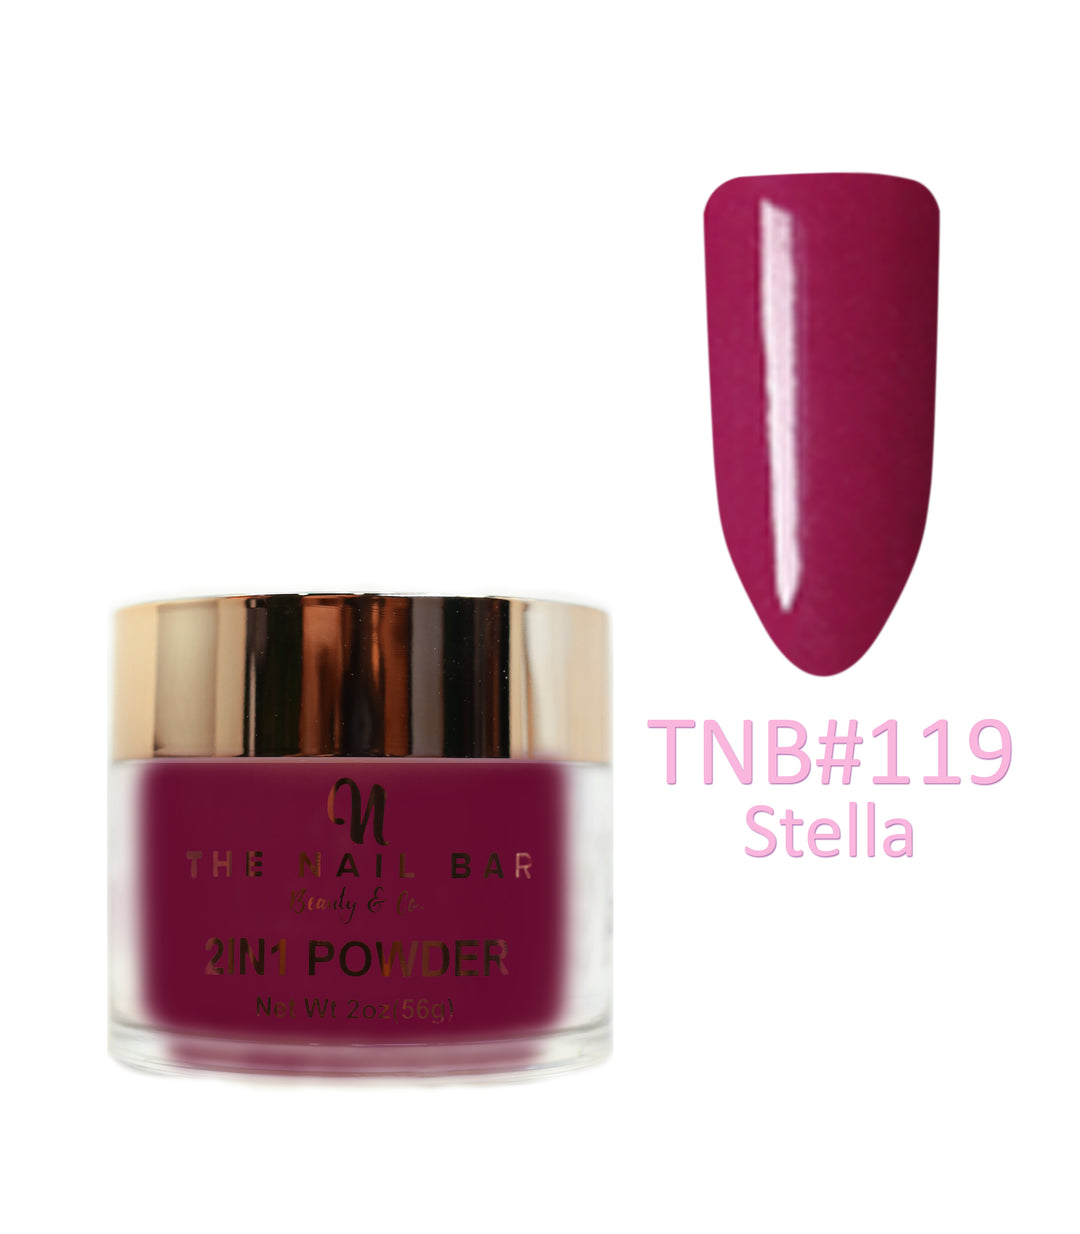 2-In-1 Dipping/Acrylic colour powder (2oz) -Stella - The Nail Bar Beauty & Co.